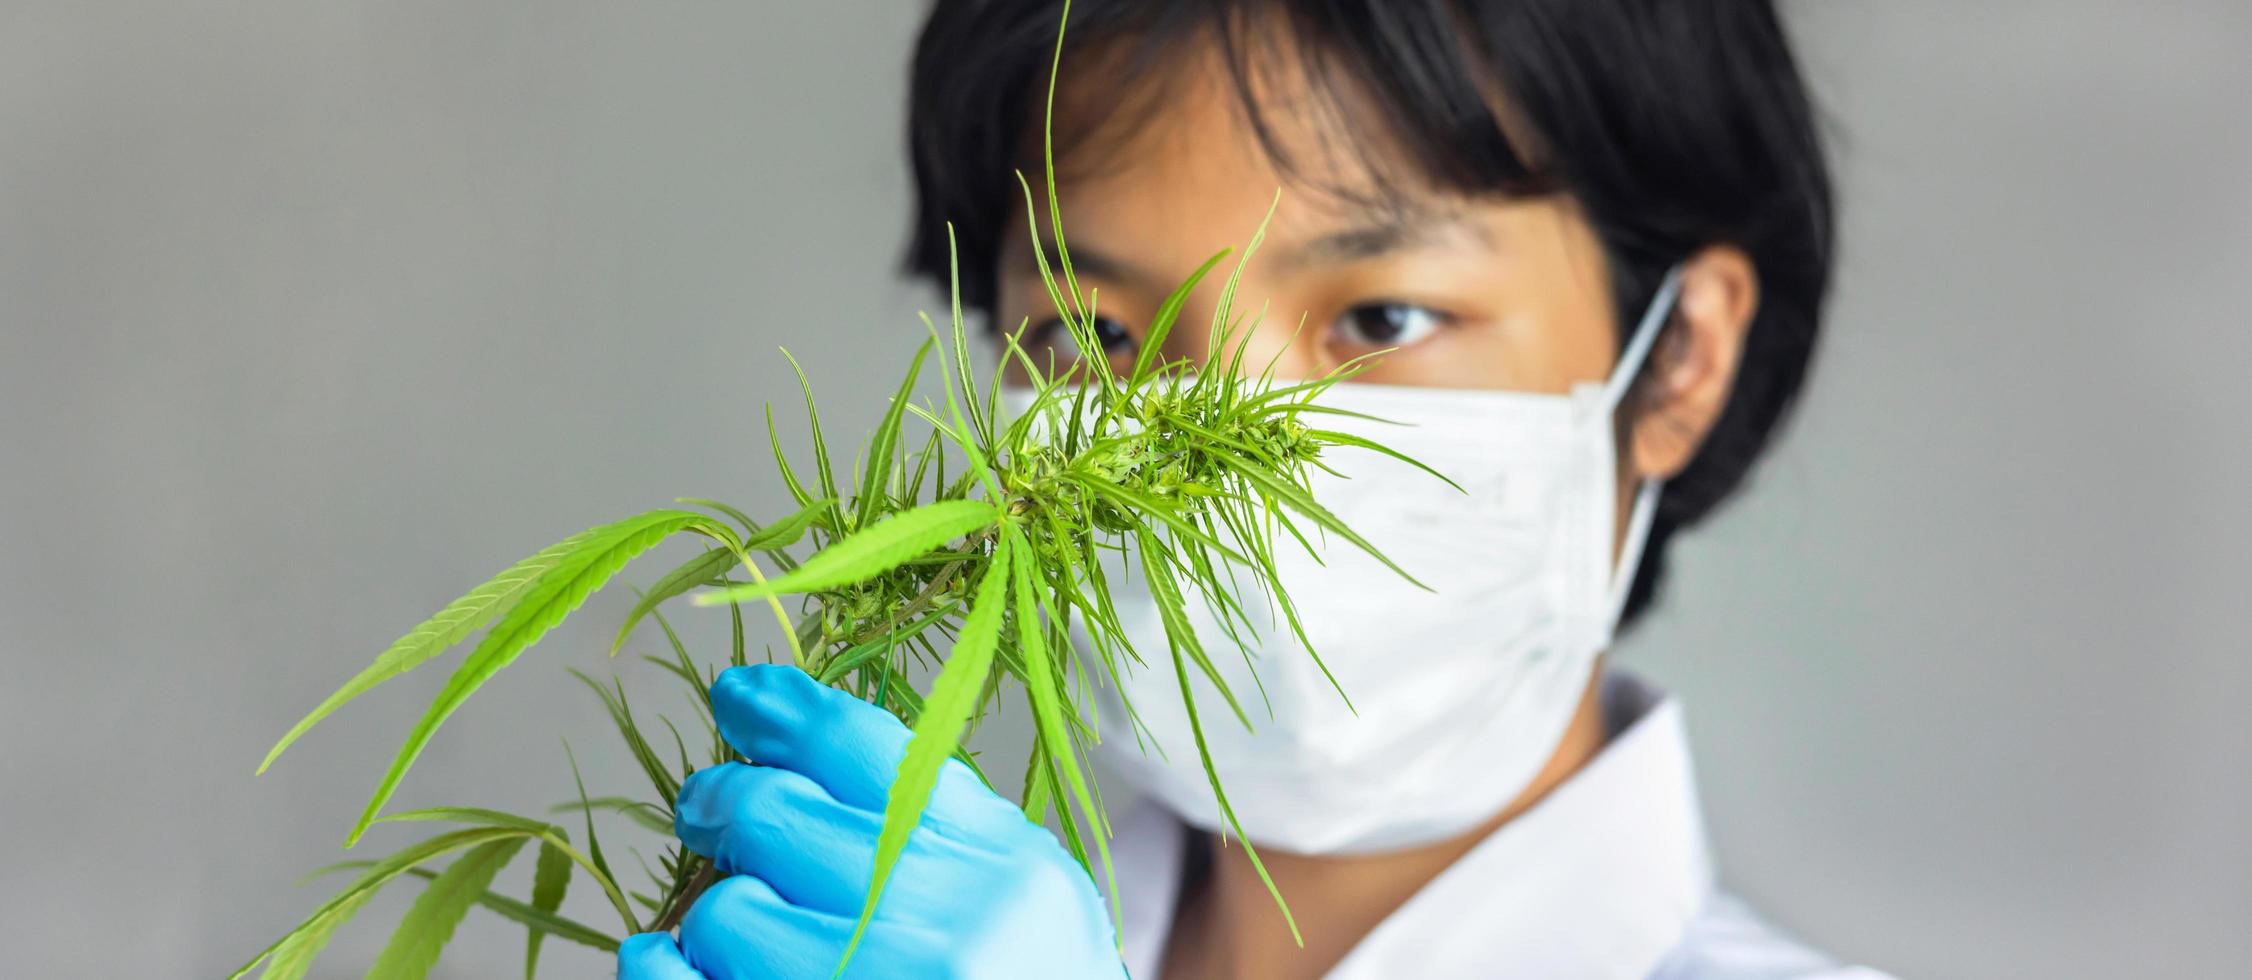 Portrait of scientist checking cannabis plants. Marijuana research, cbd oil, alternative herbal medicine concept photo